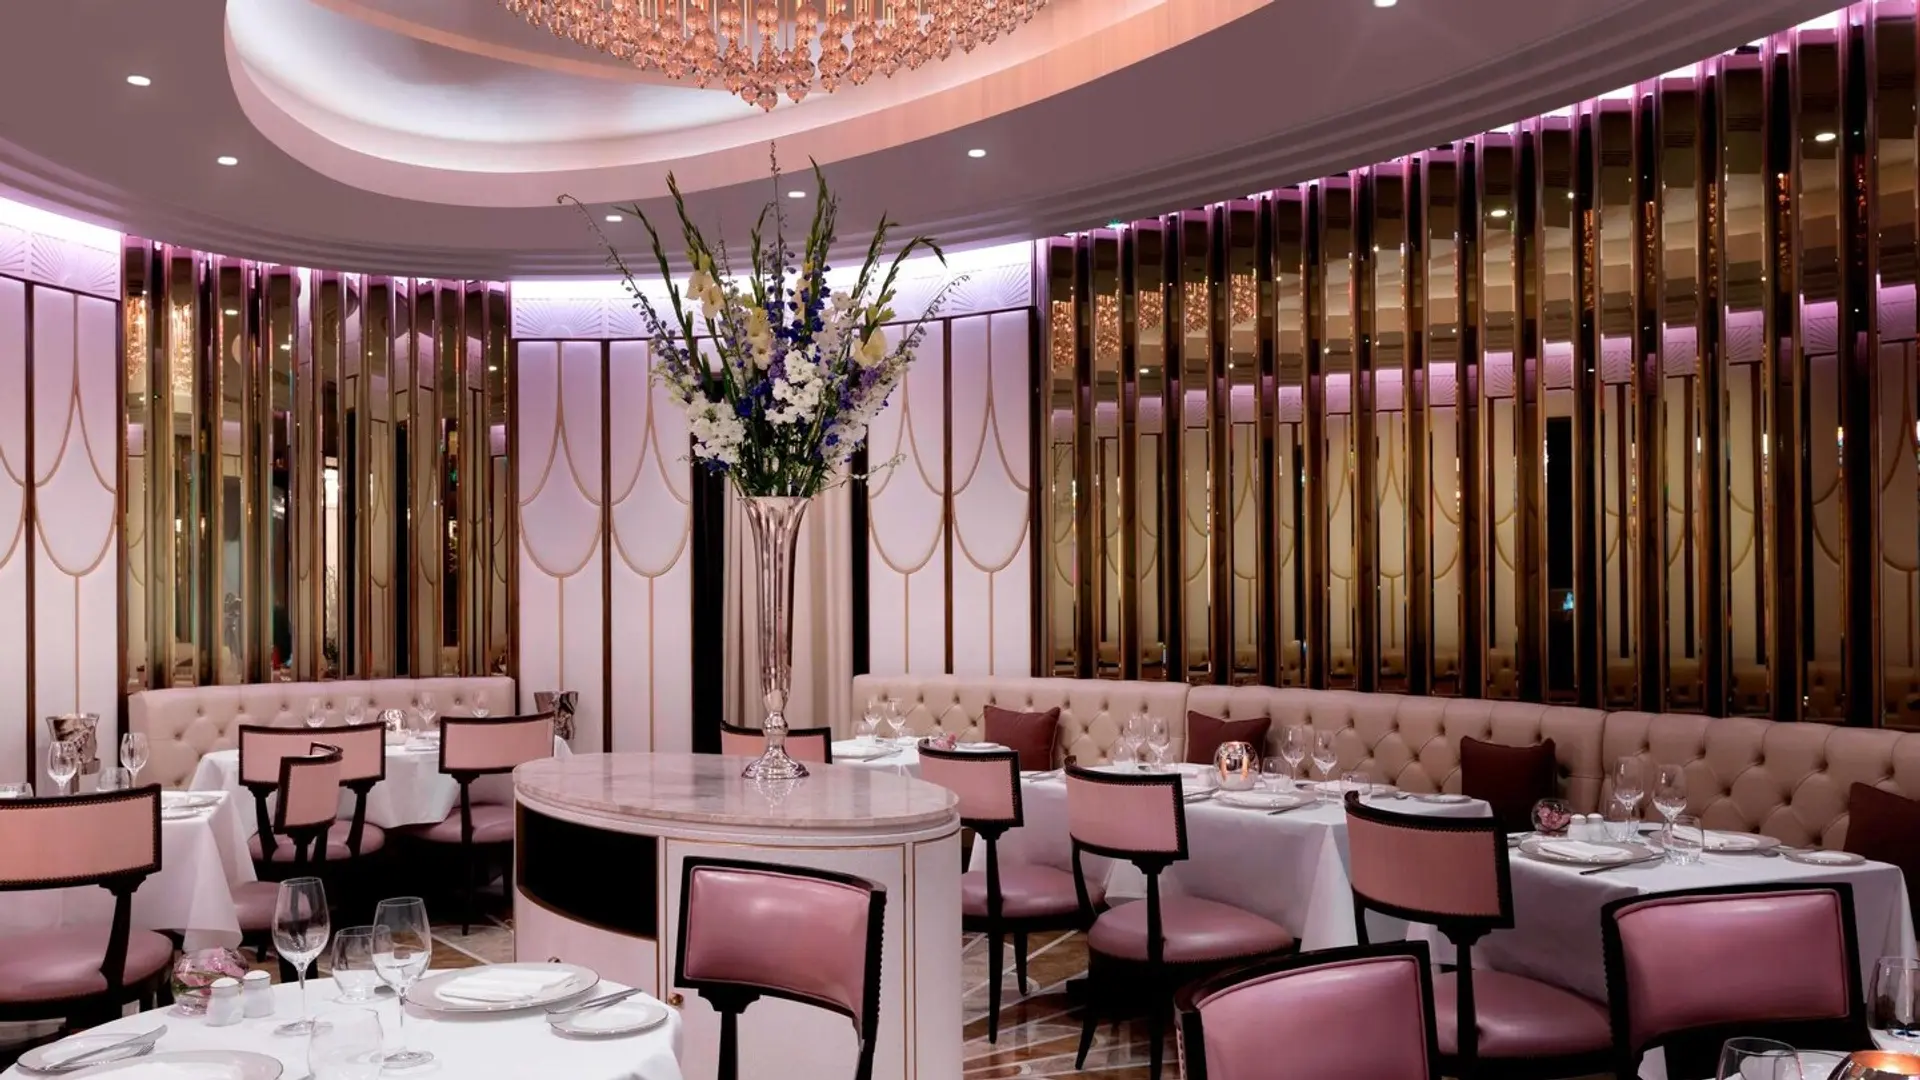 Hotel review Restaurants & Bars' - The Wellesley - 3